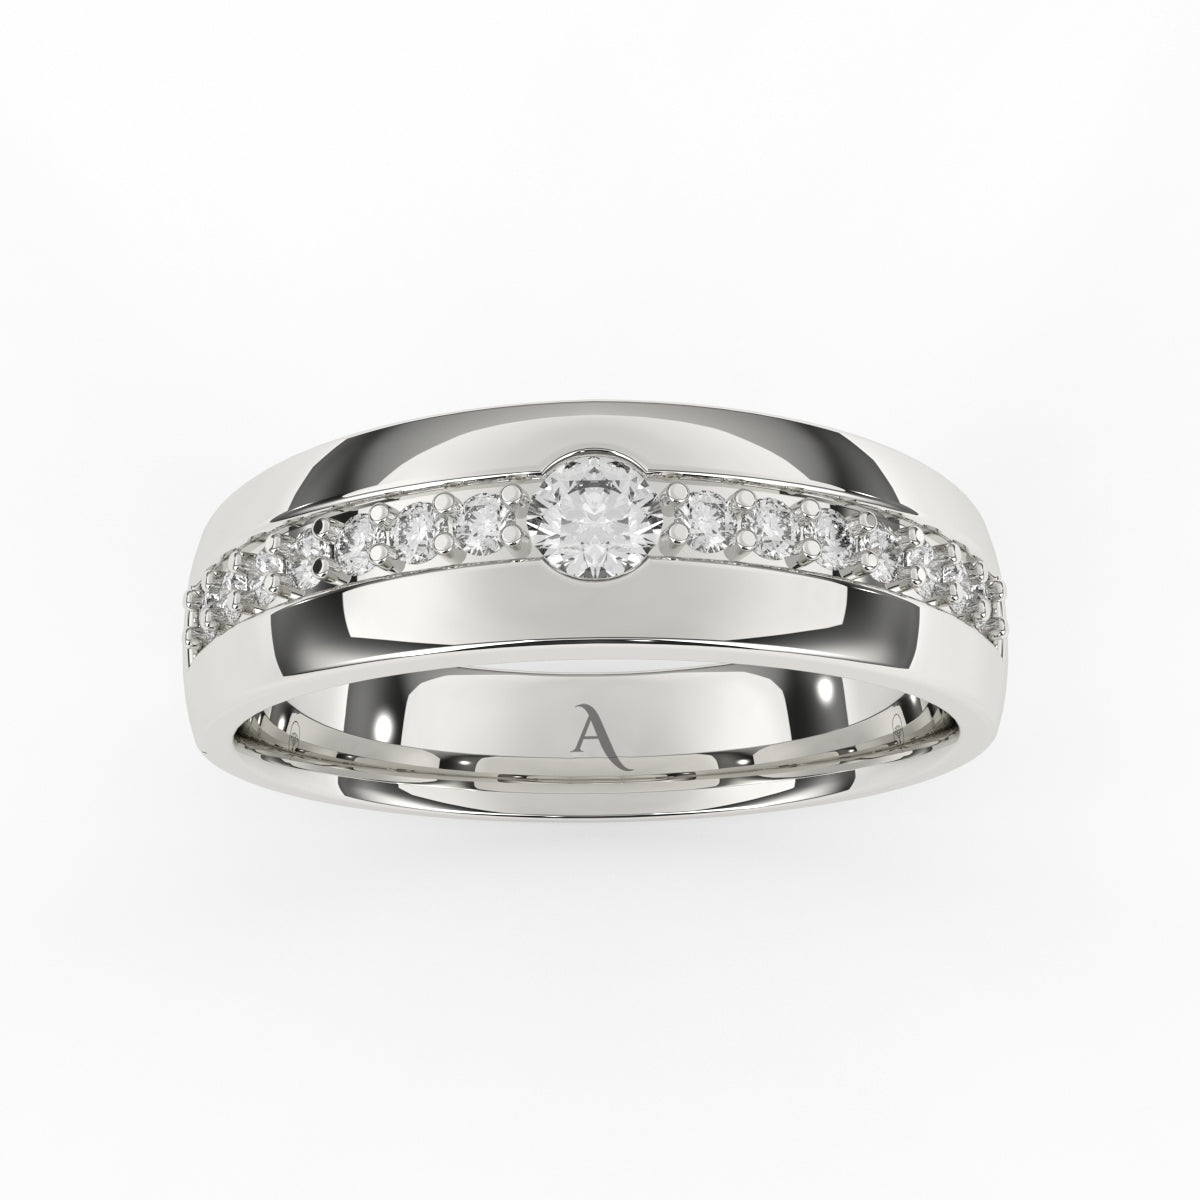 Dazzle diamond ring